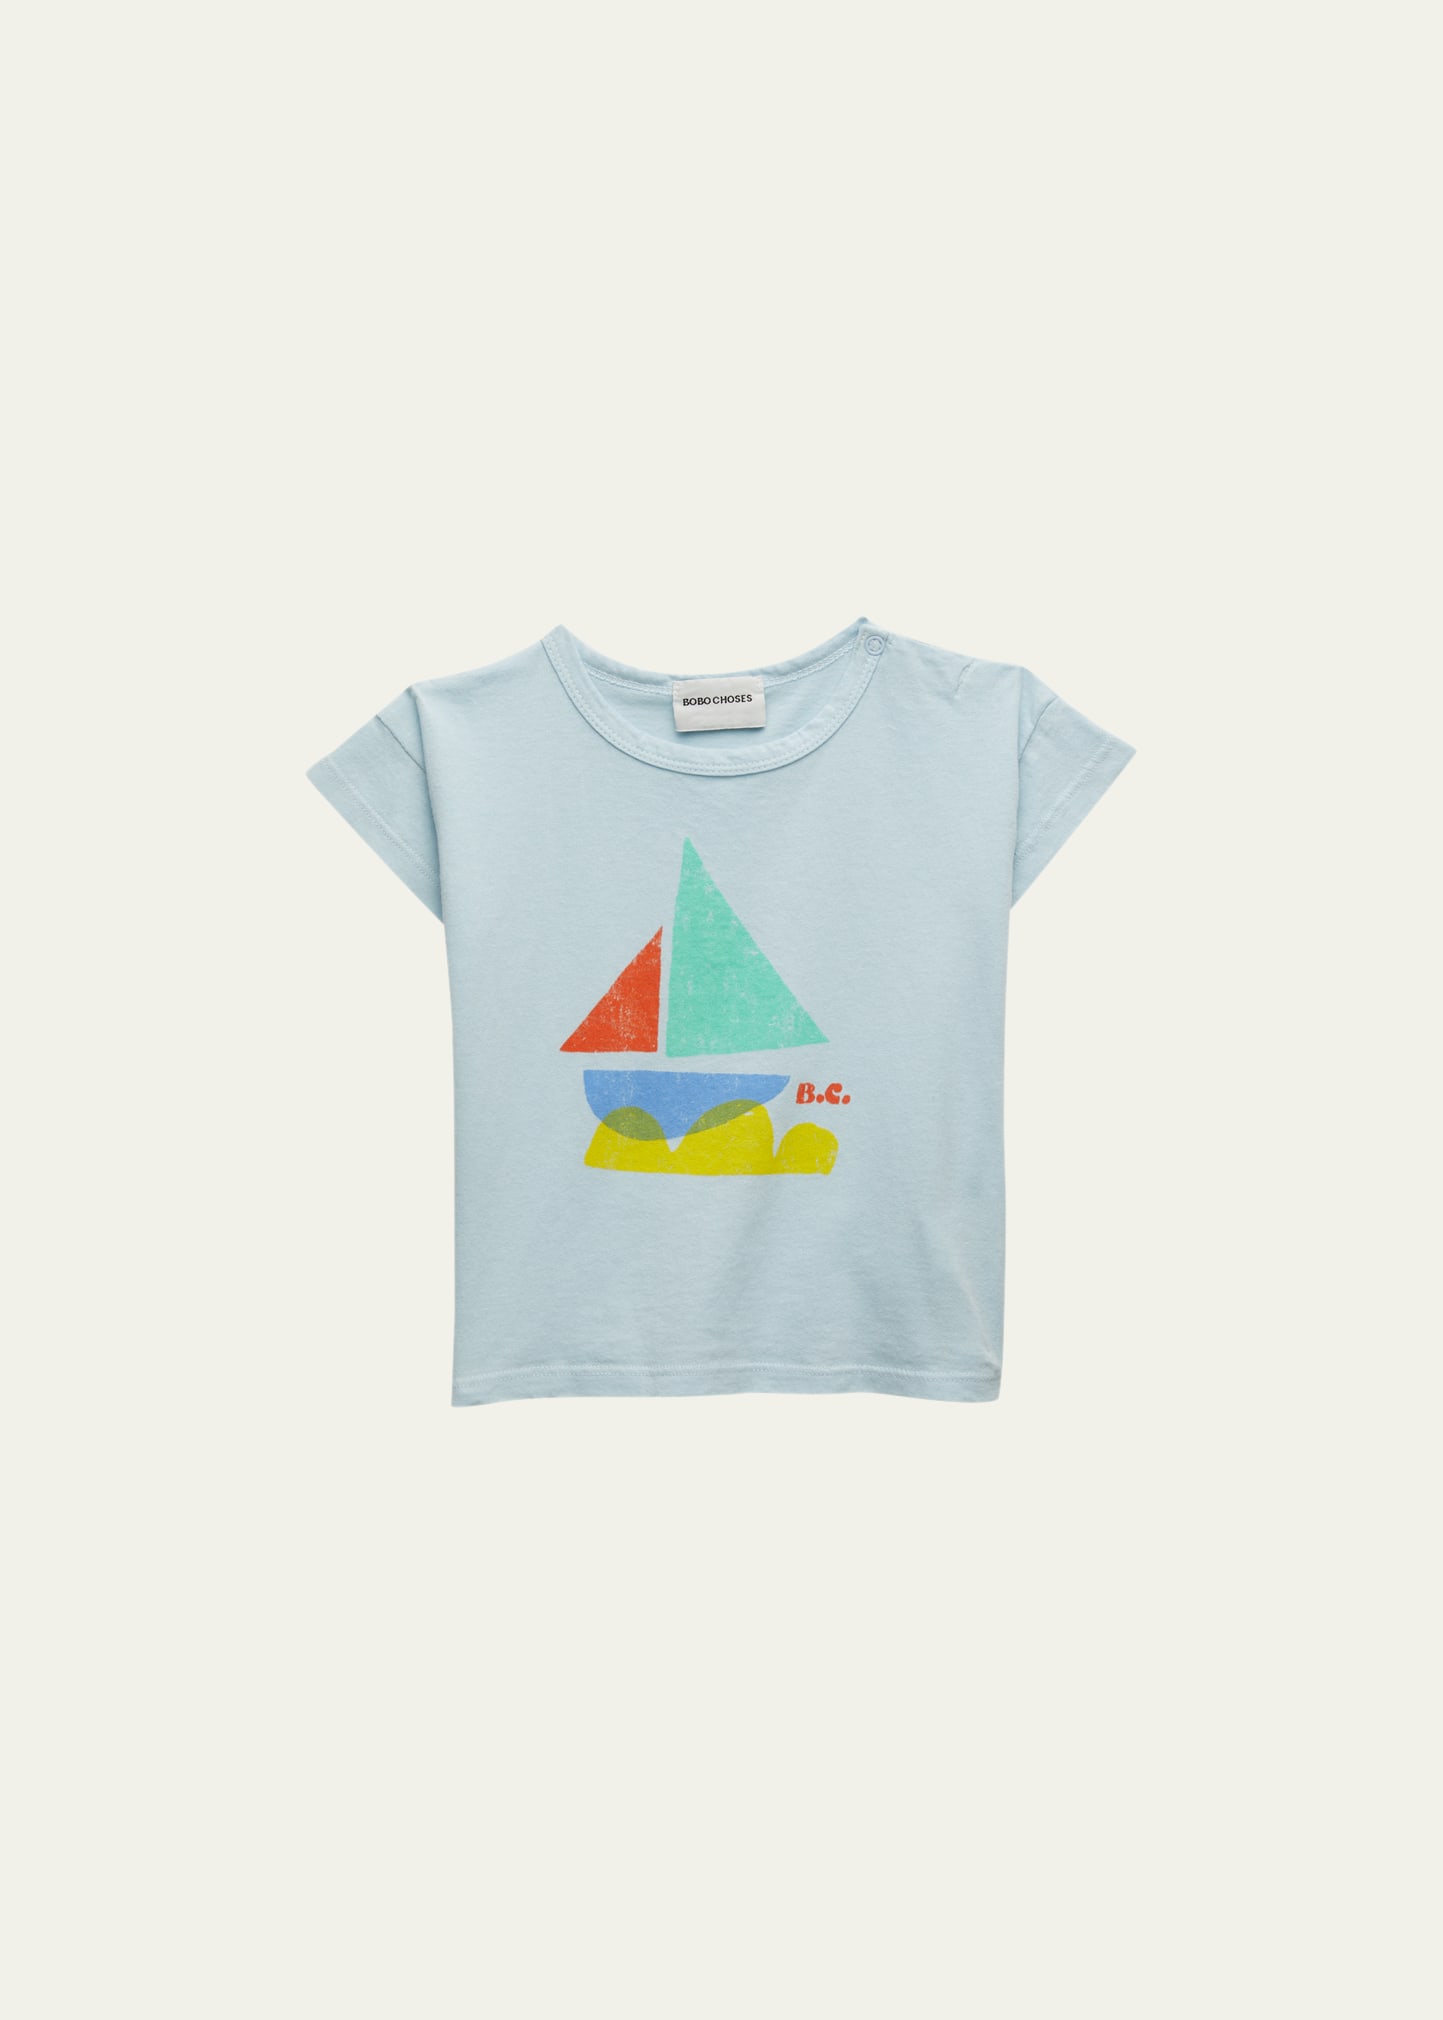 Bobo Choses Girl's Multicolor Sail Boat Graphic T-Shirt, Size 6M-24M